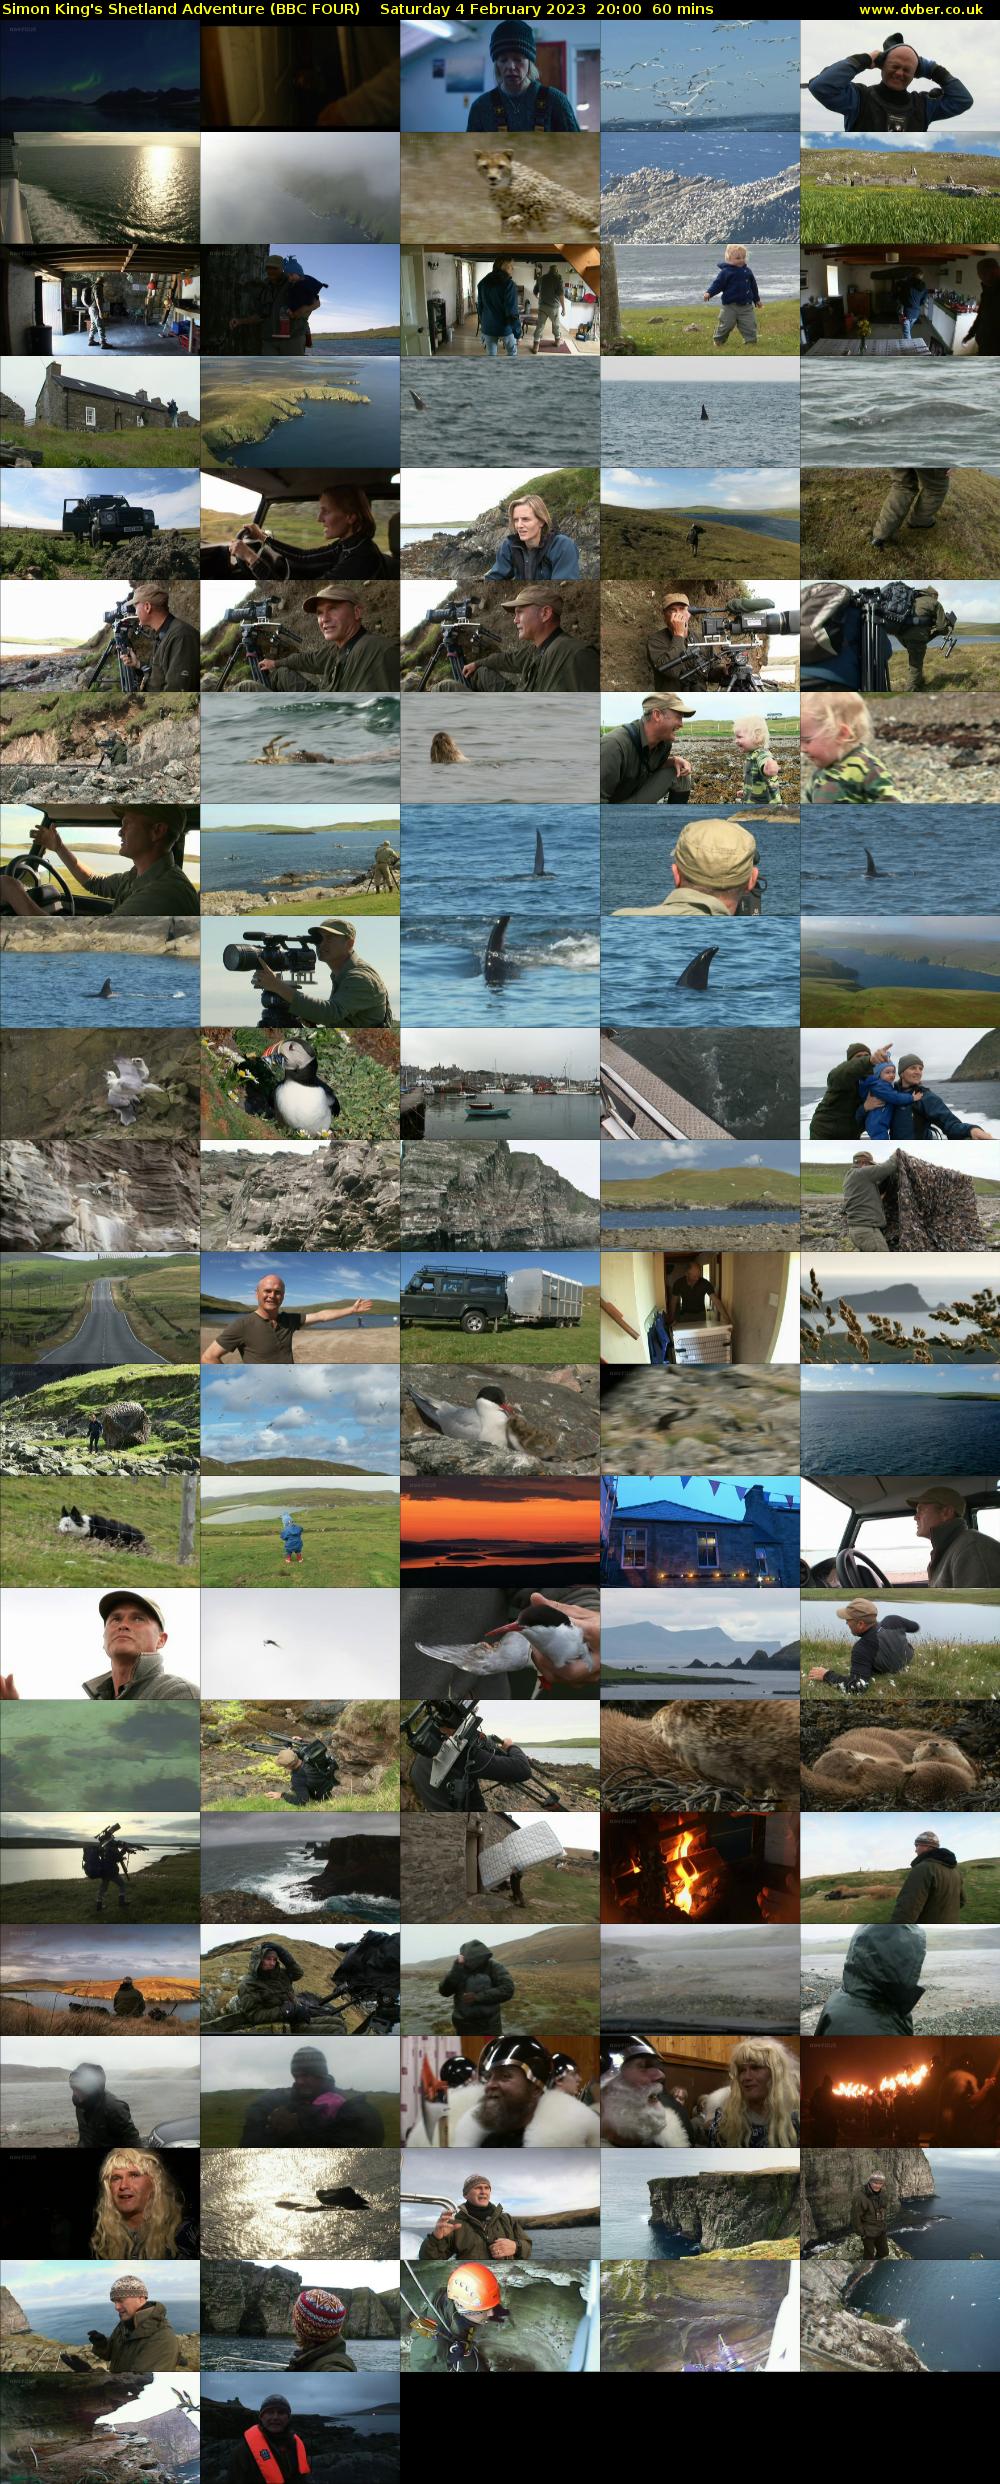 Simon King's Shetland Adventure (BBC FOUR) Saturday 4 February 2023 20:00 - 21:00